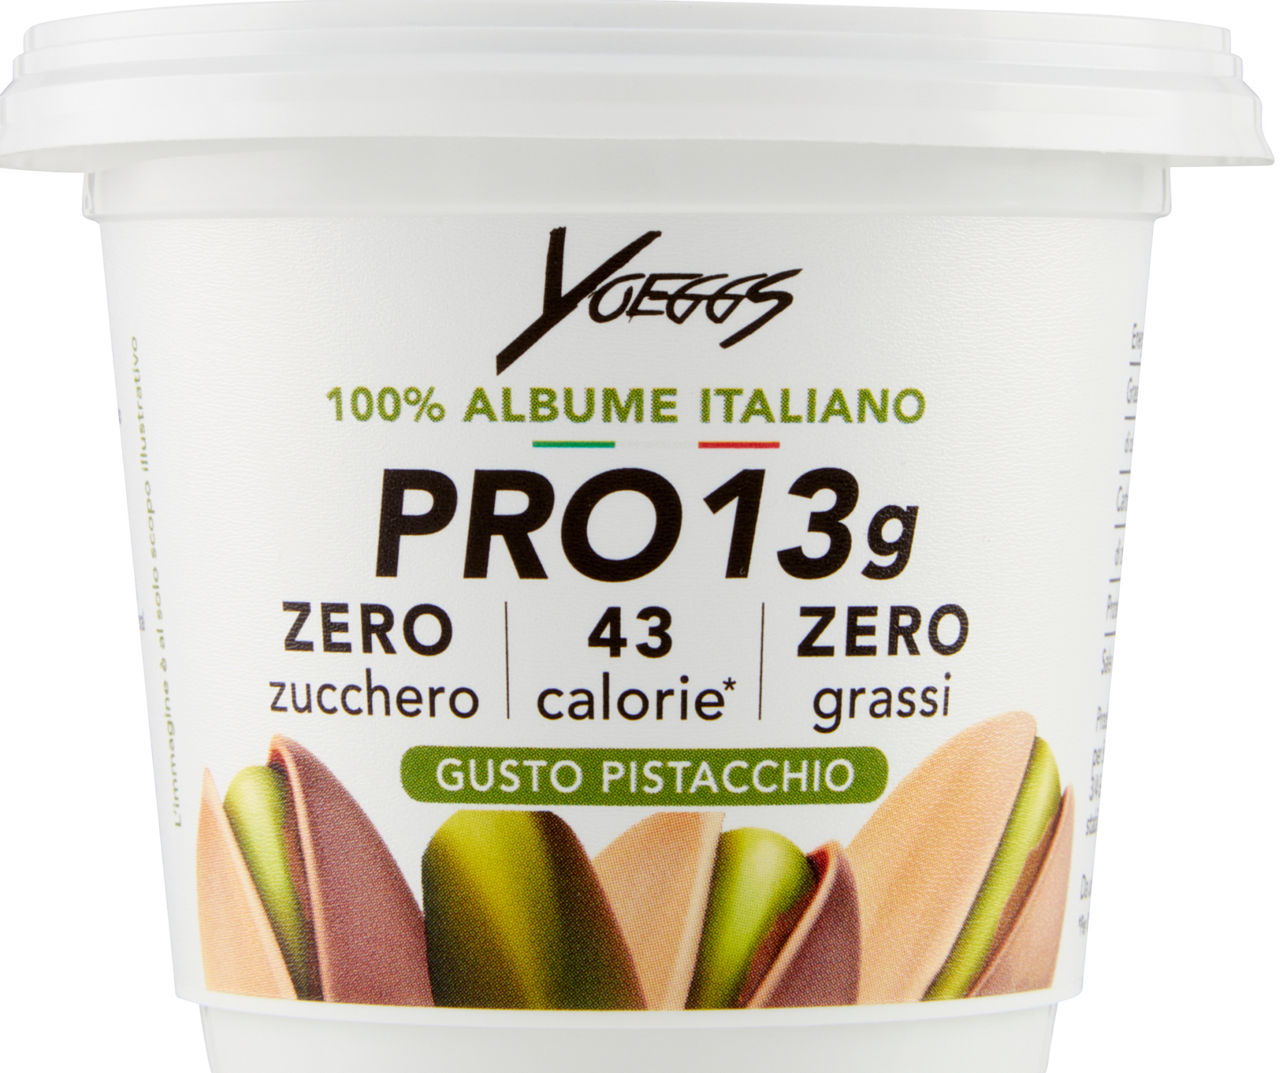 Yoeggs pro 13 pistacchio 125g